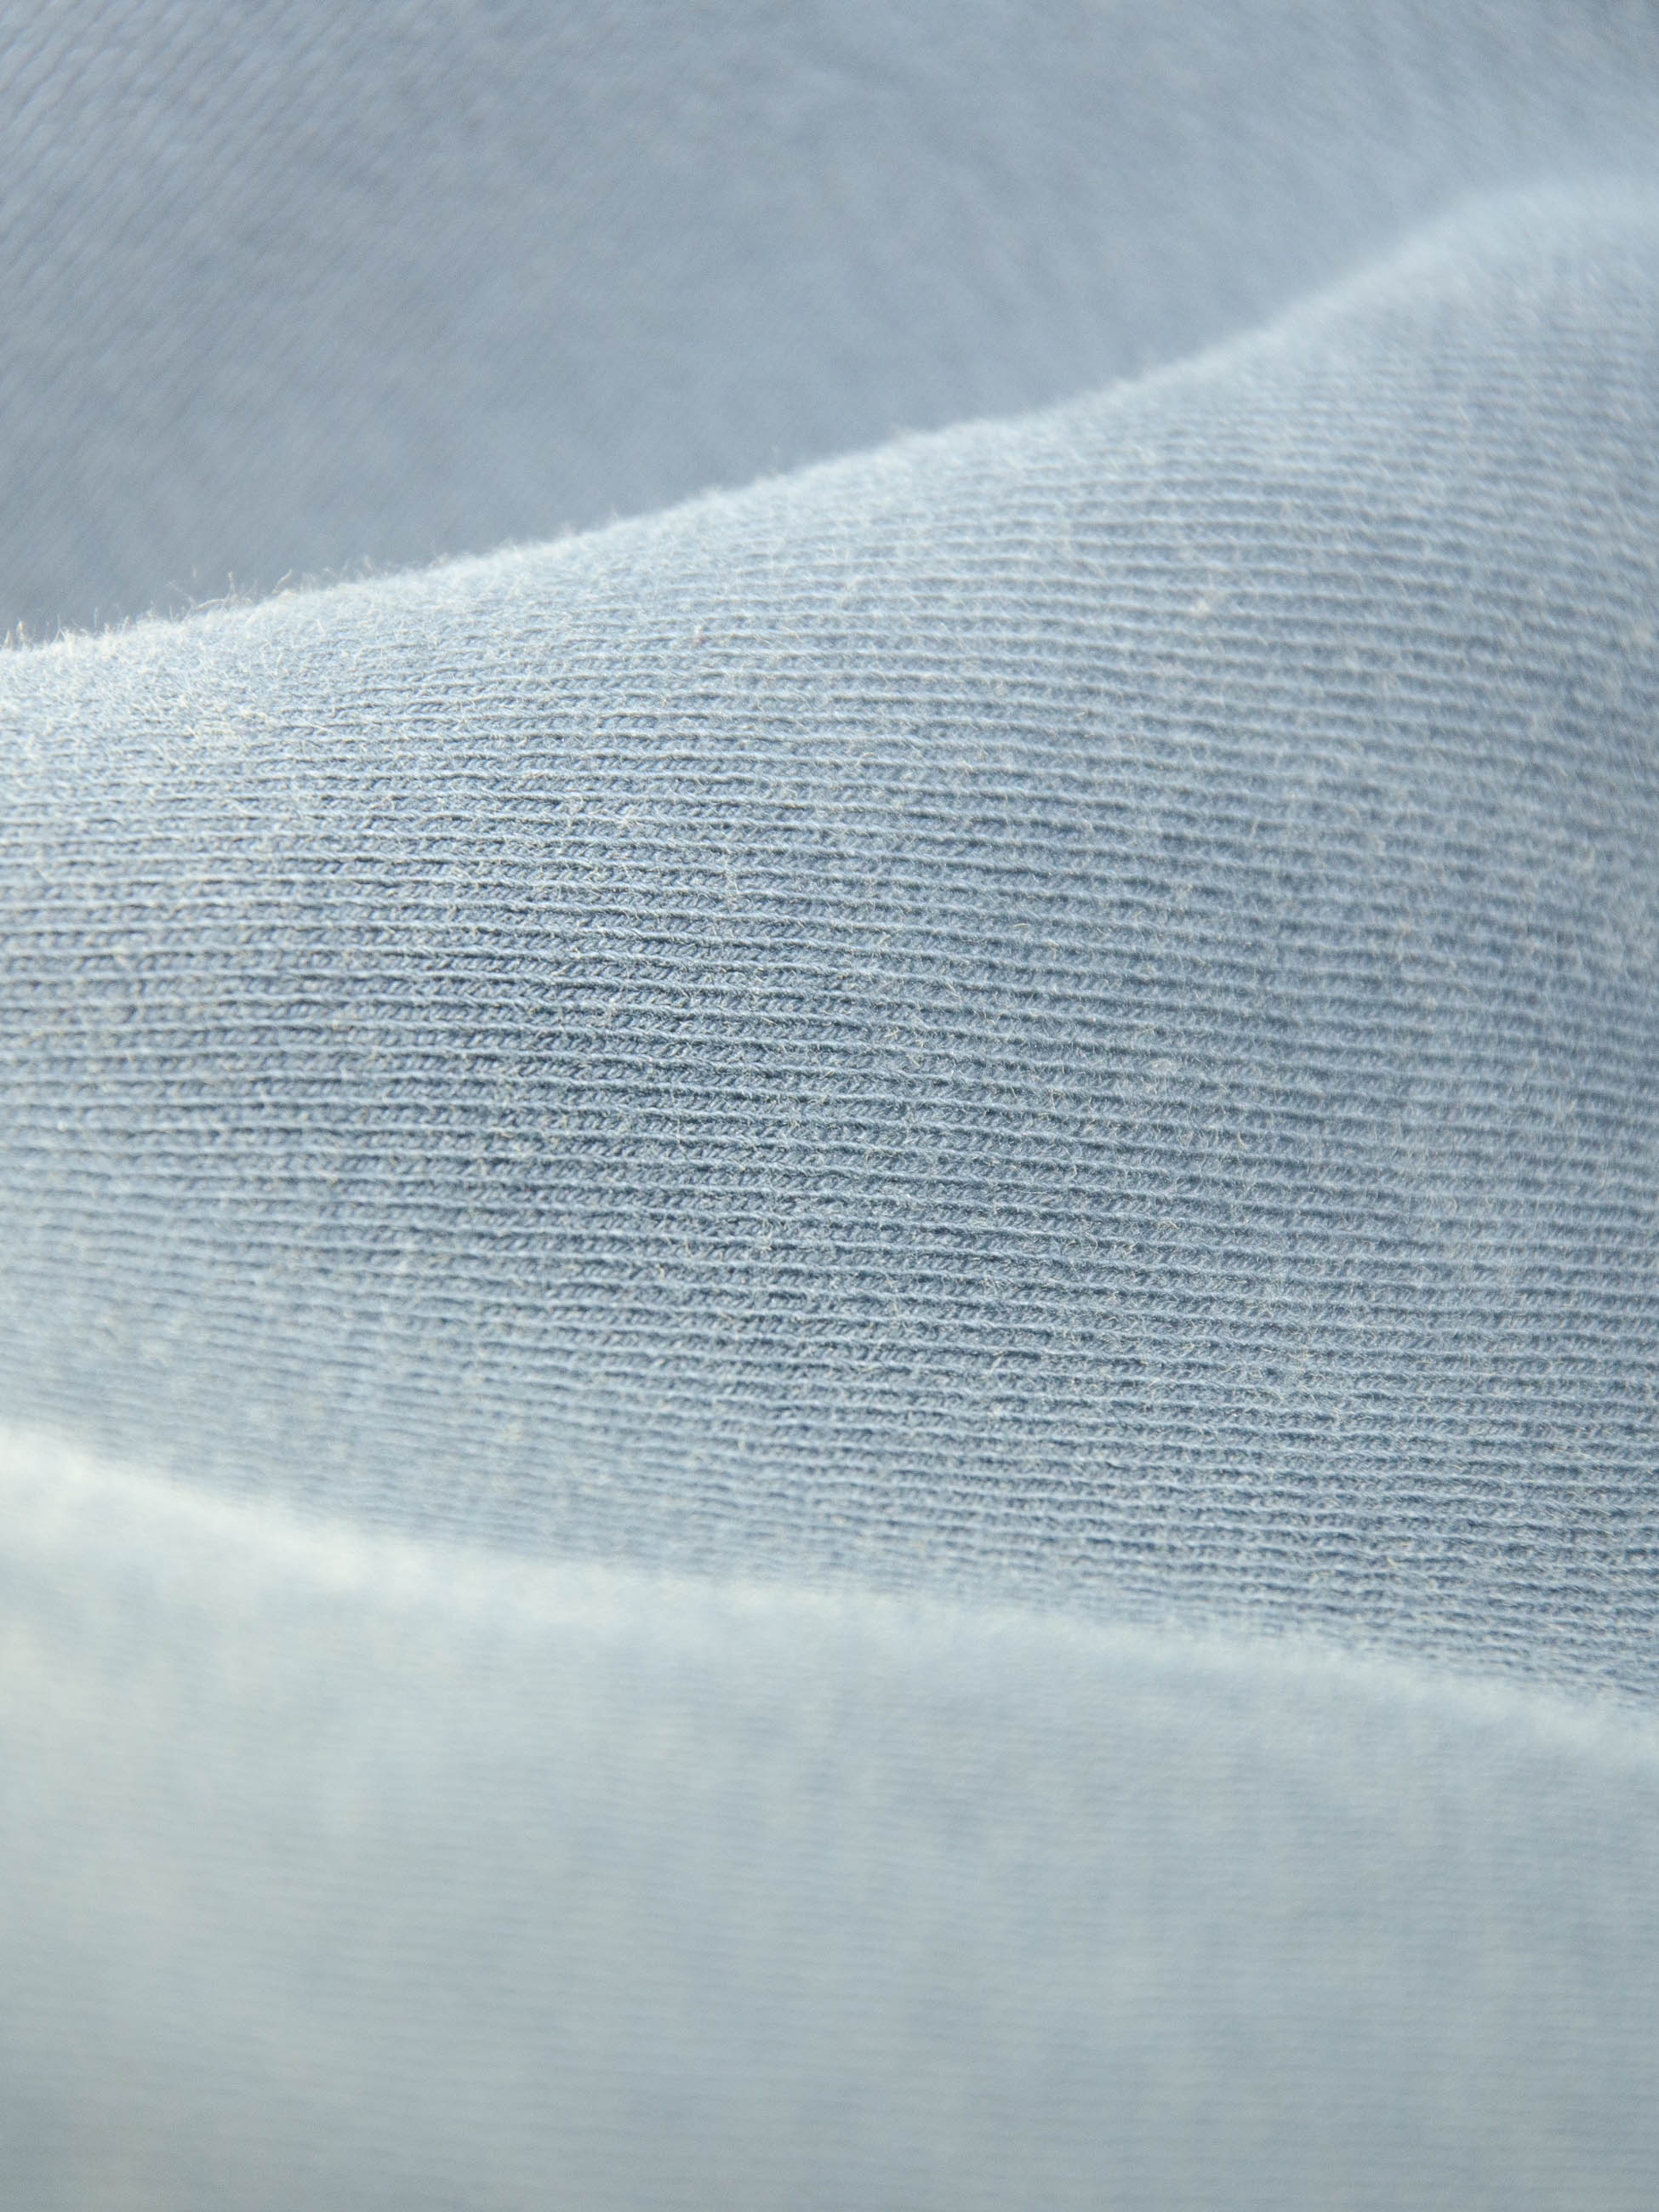 Publik Brand Double Layered Sweatshirt Crewneck Indigo Heavyweight Fleece, all made in USA, fabric details, textures, and softness